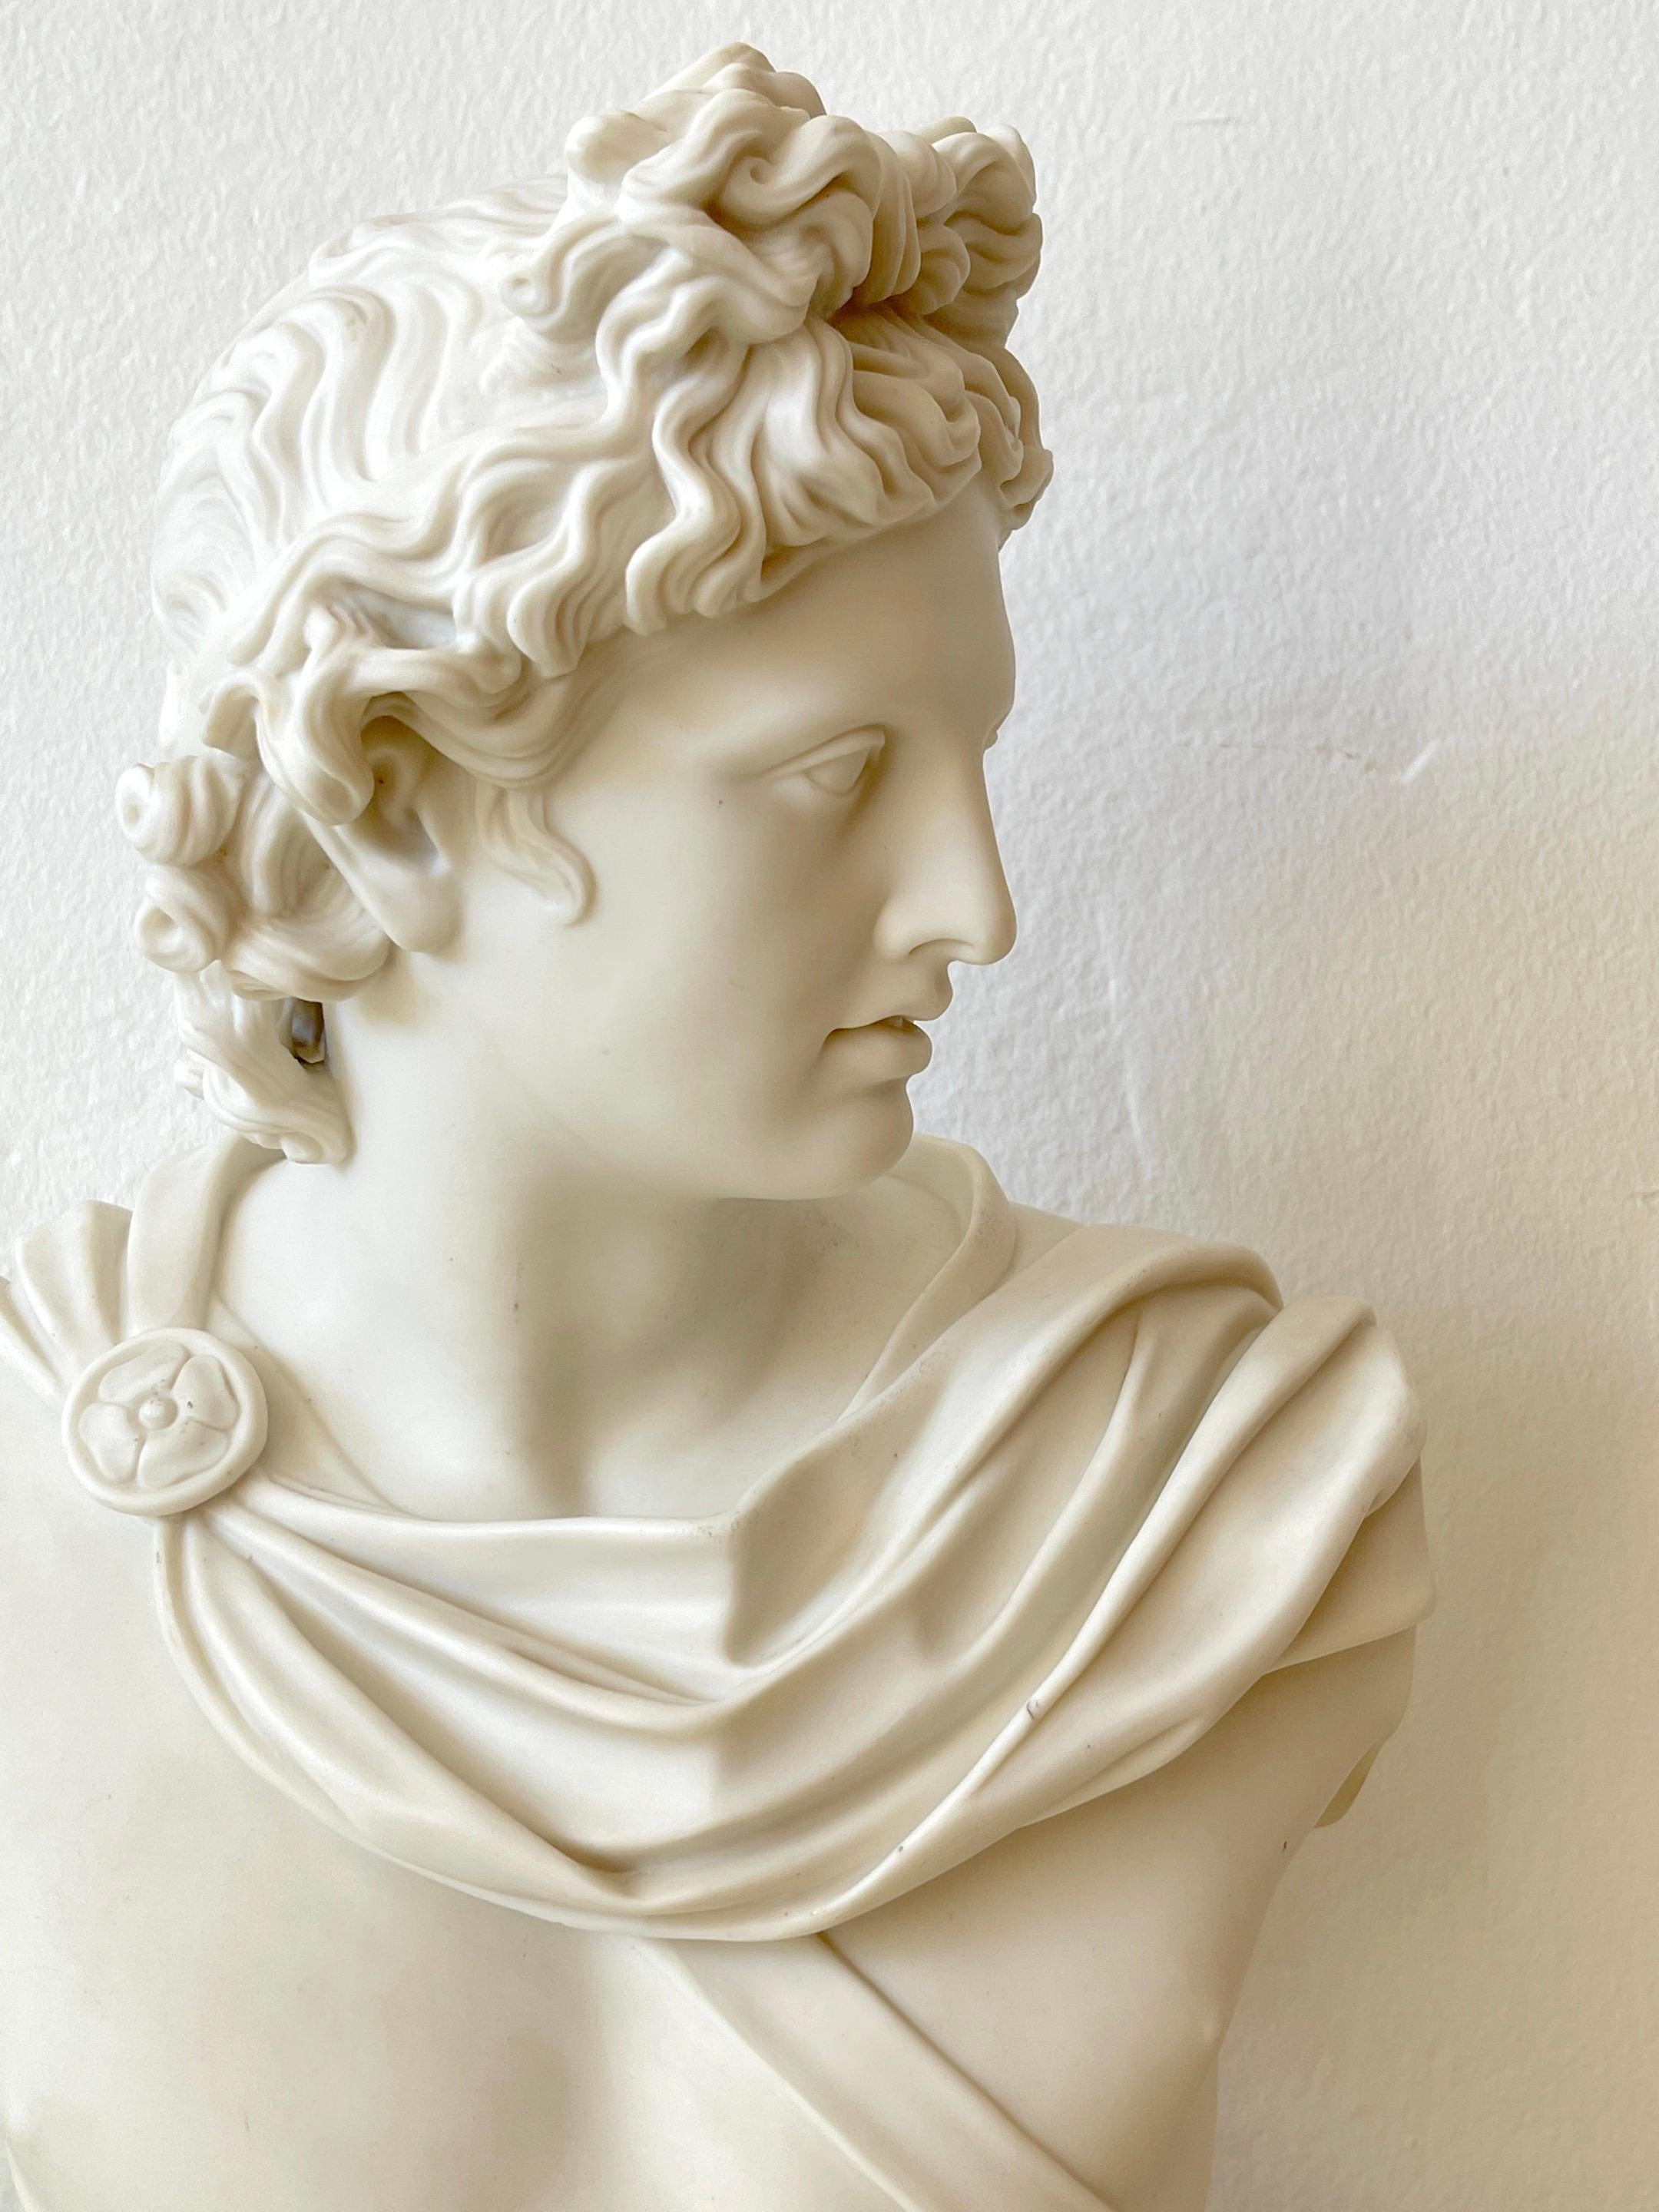 Classical Roman Art Union of London Parian Bust of Apollo Belvedere, by C. Delpech, 1861